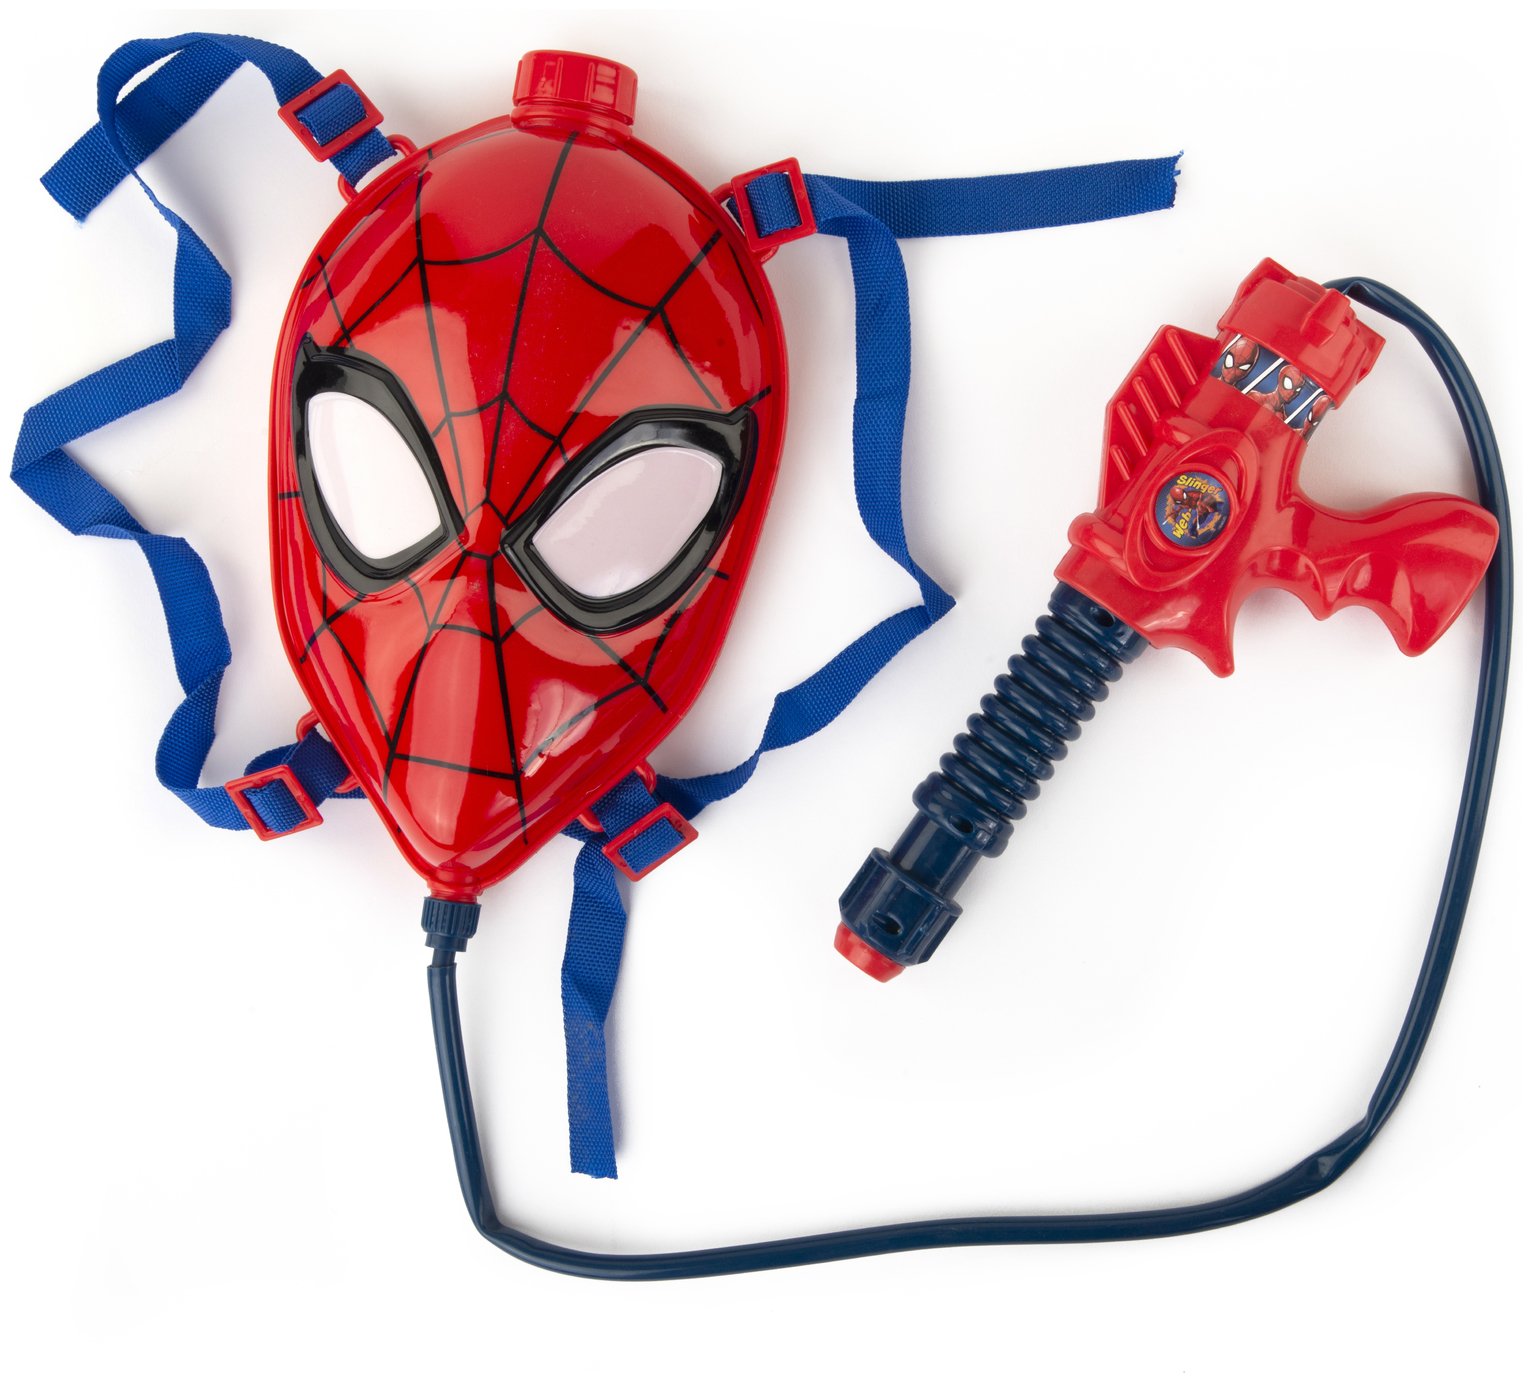 Marvel Spiderman Water Blaster Backpack review